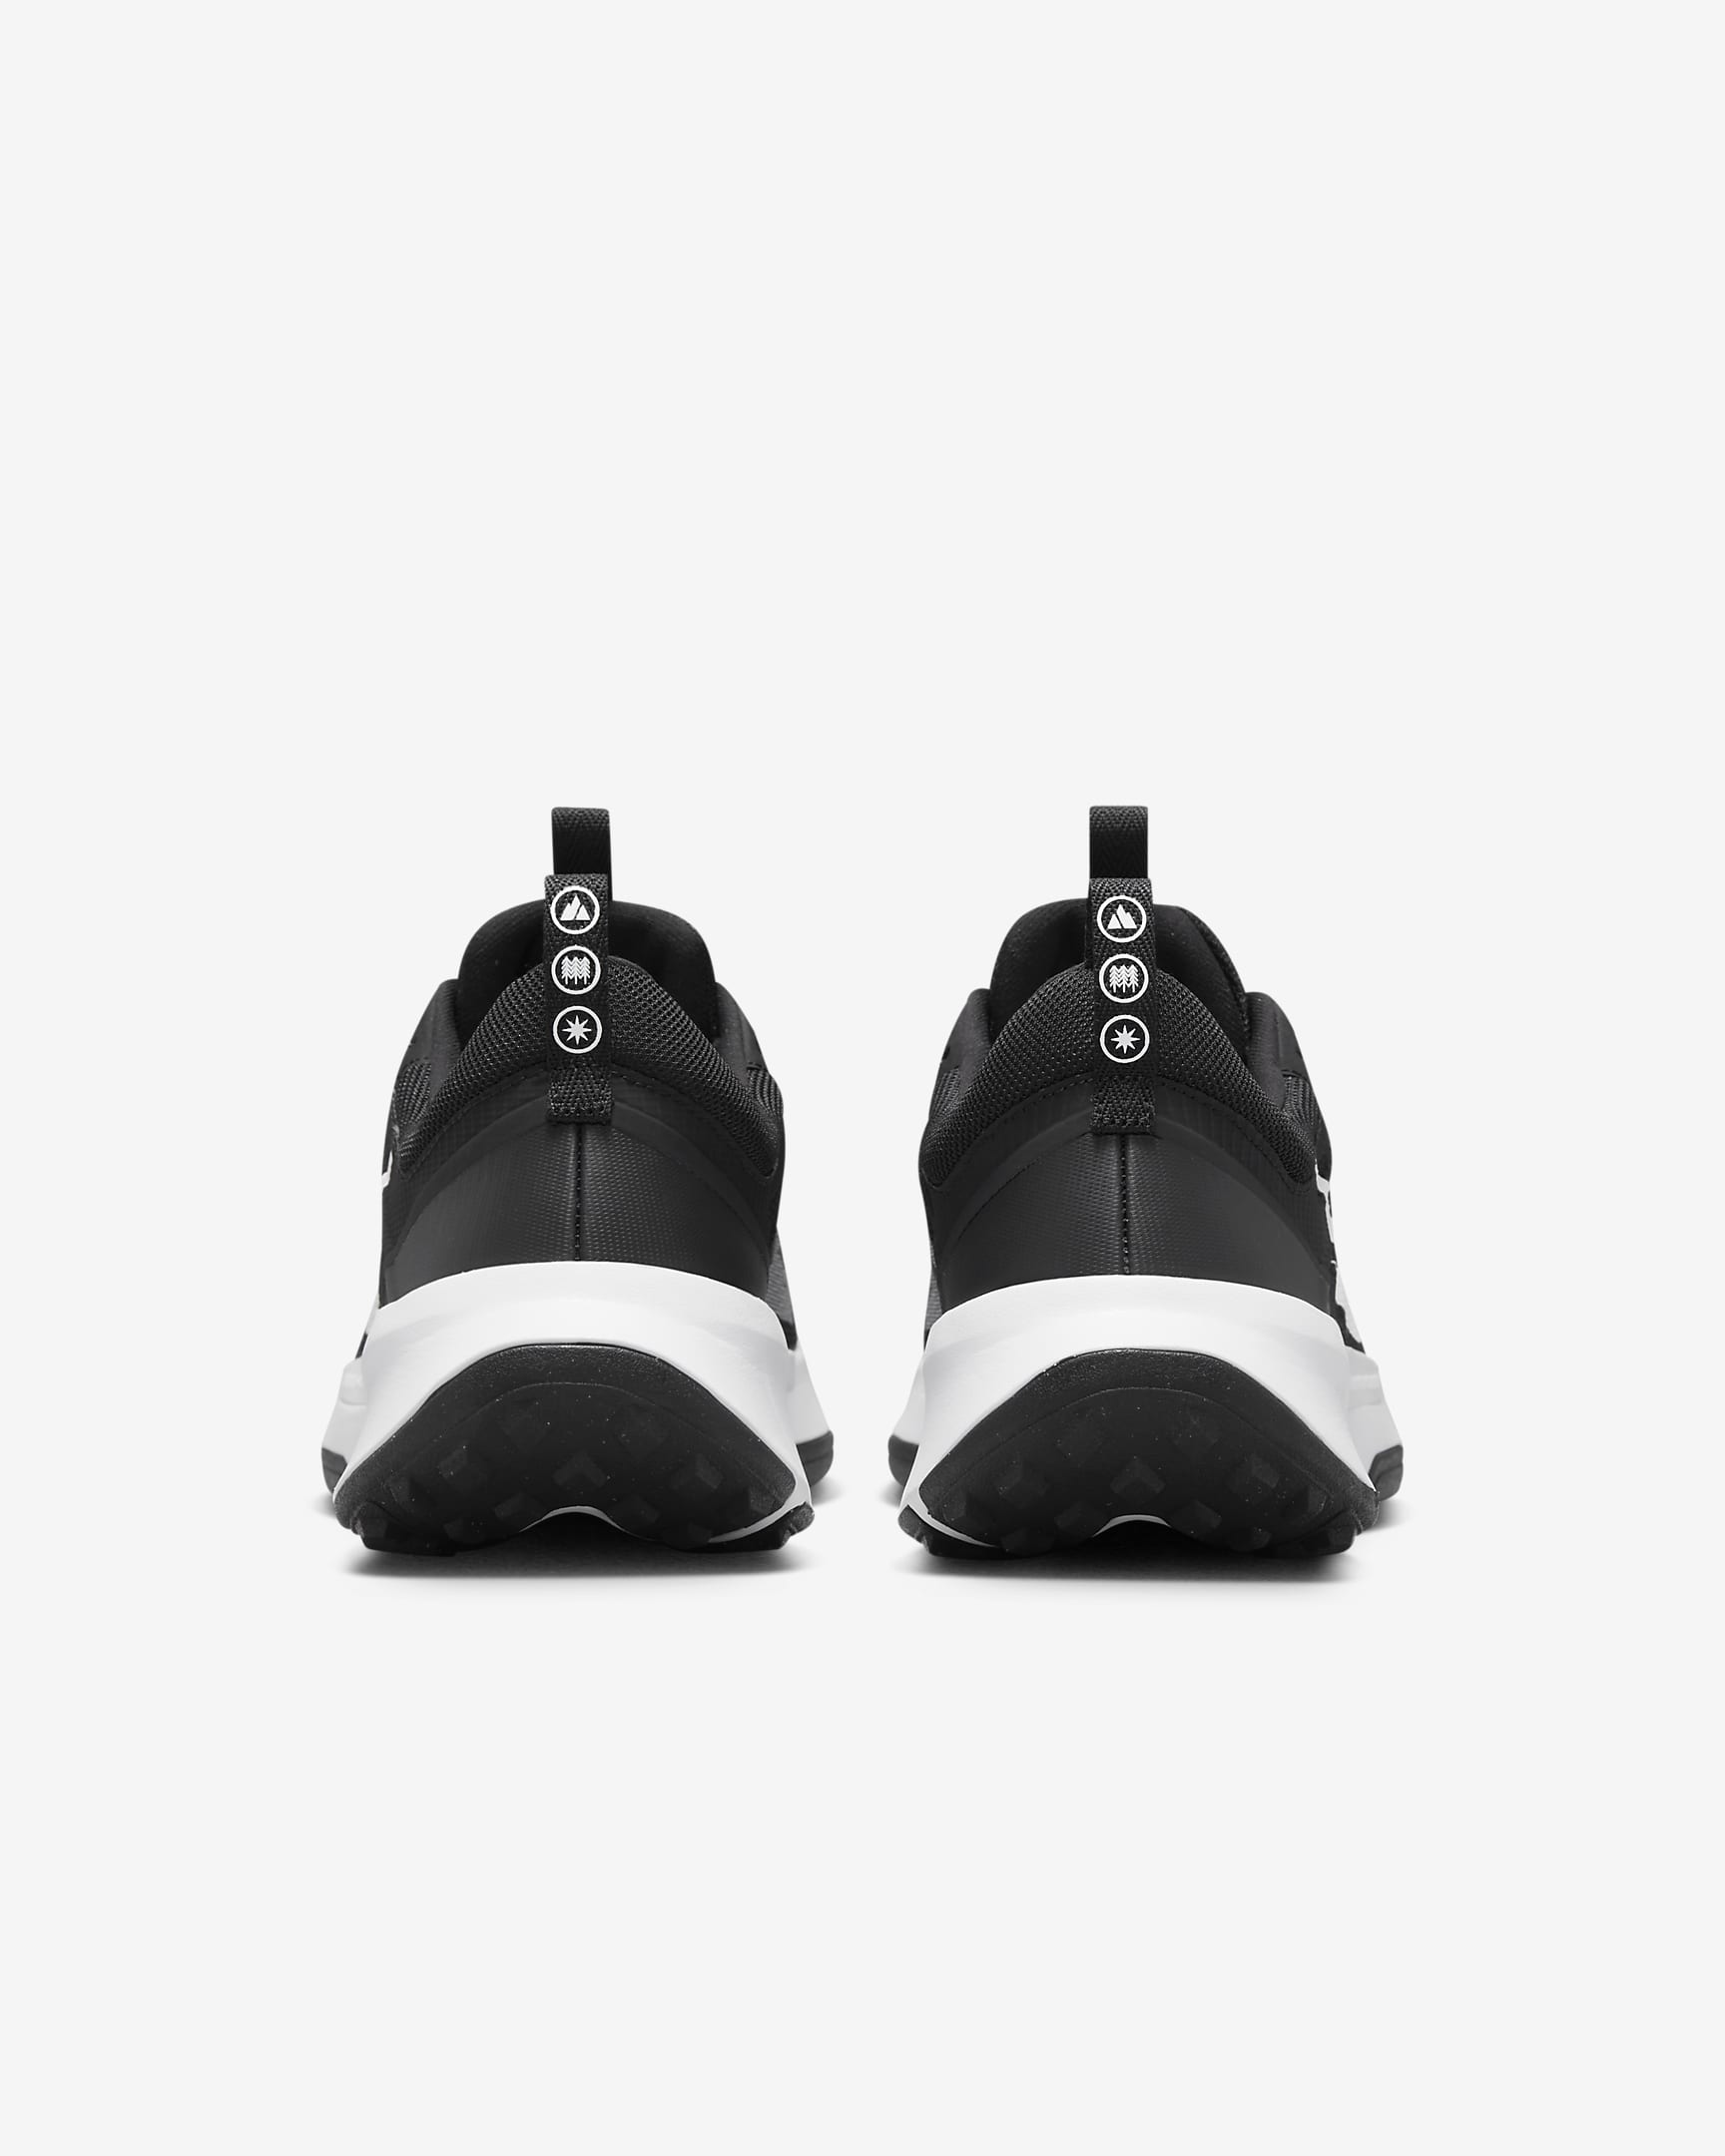 Nike Juniper Trail 2 Men's Trail Running Shoes - Black/White